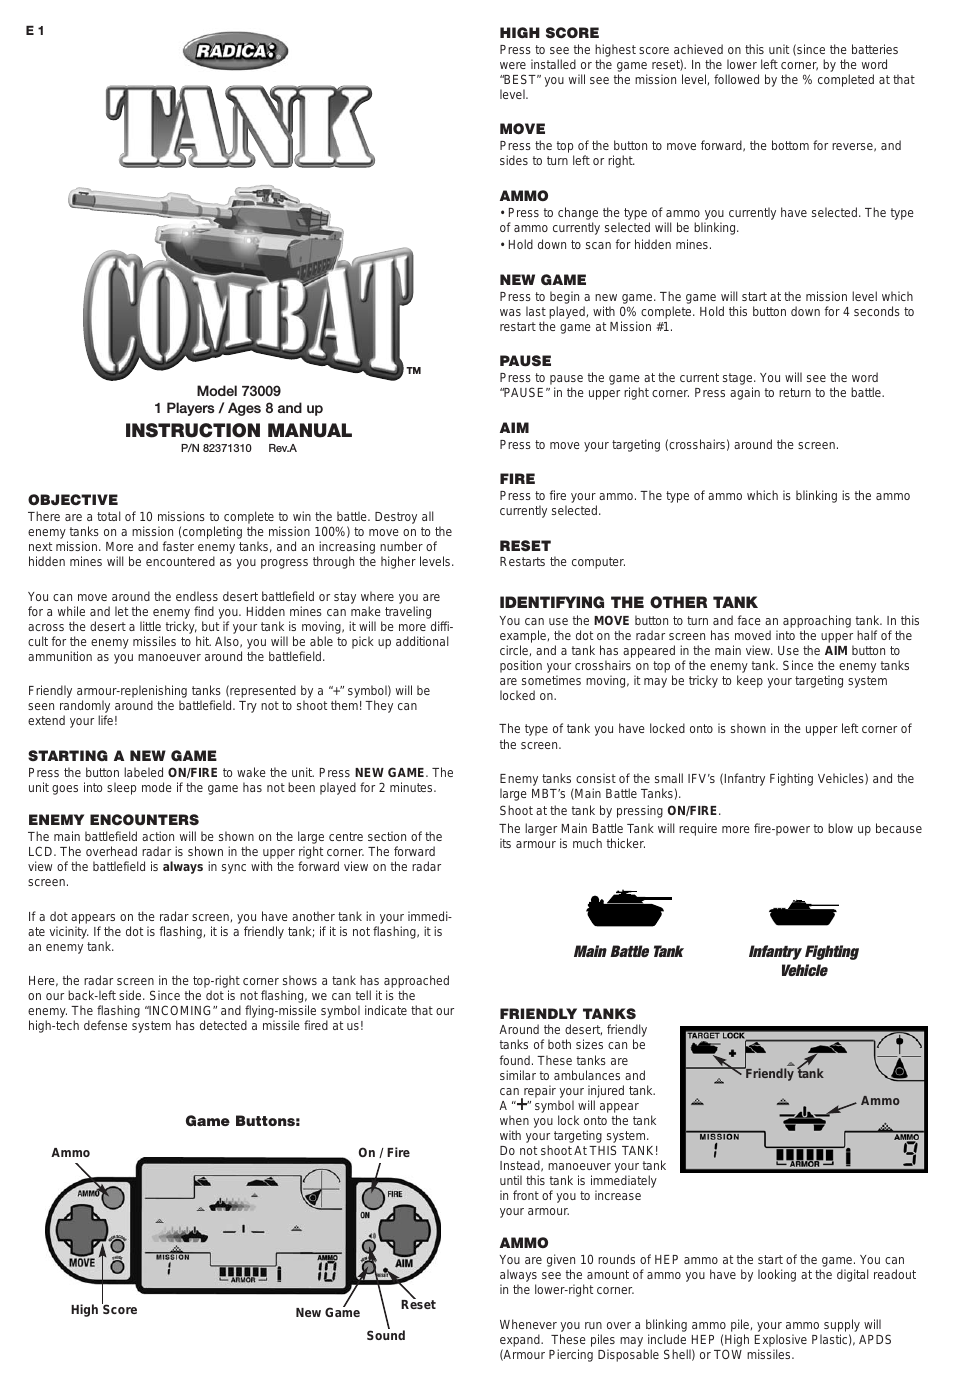 Tank Combat 73009